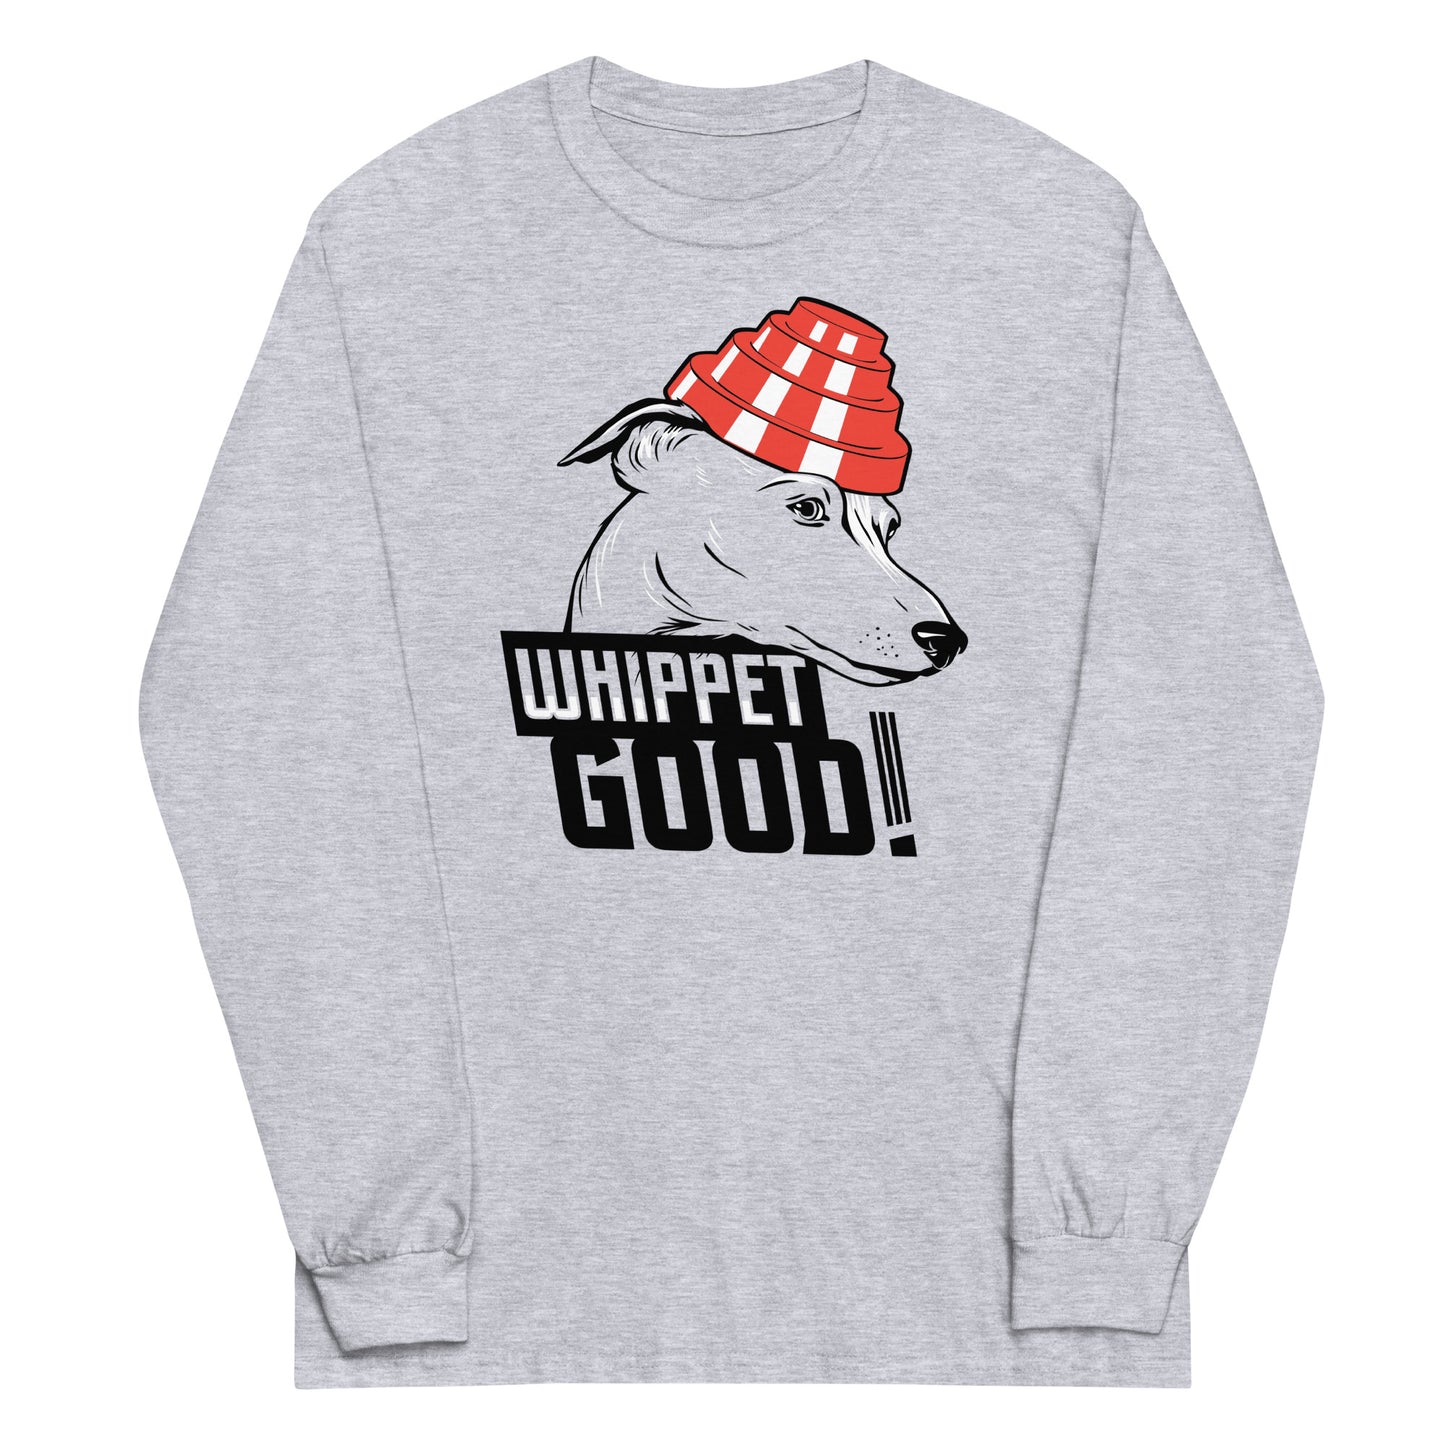 Whippet Good! Unisex Long Sleeve Tee